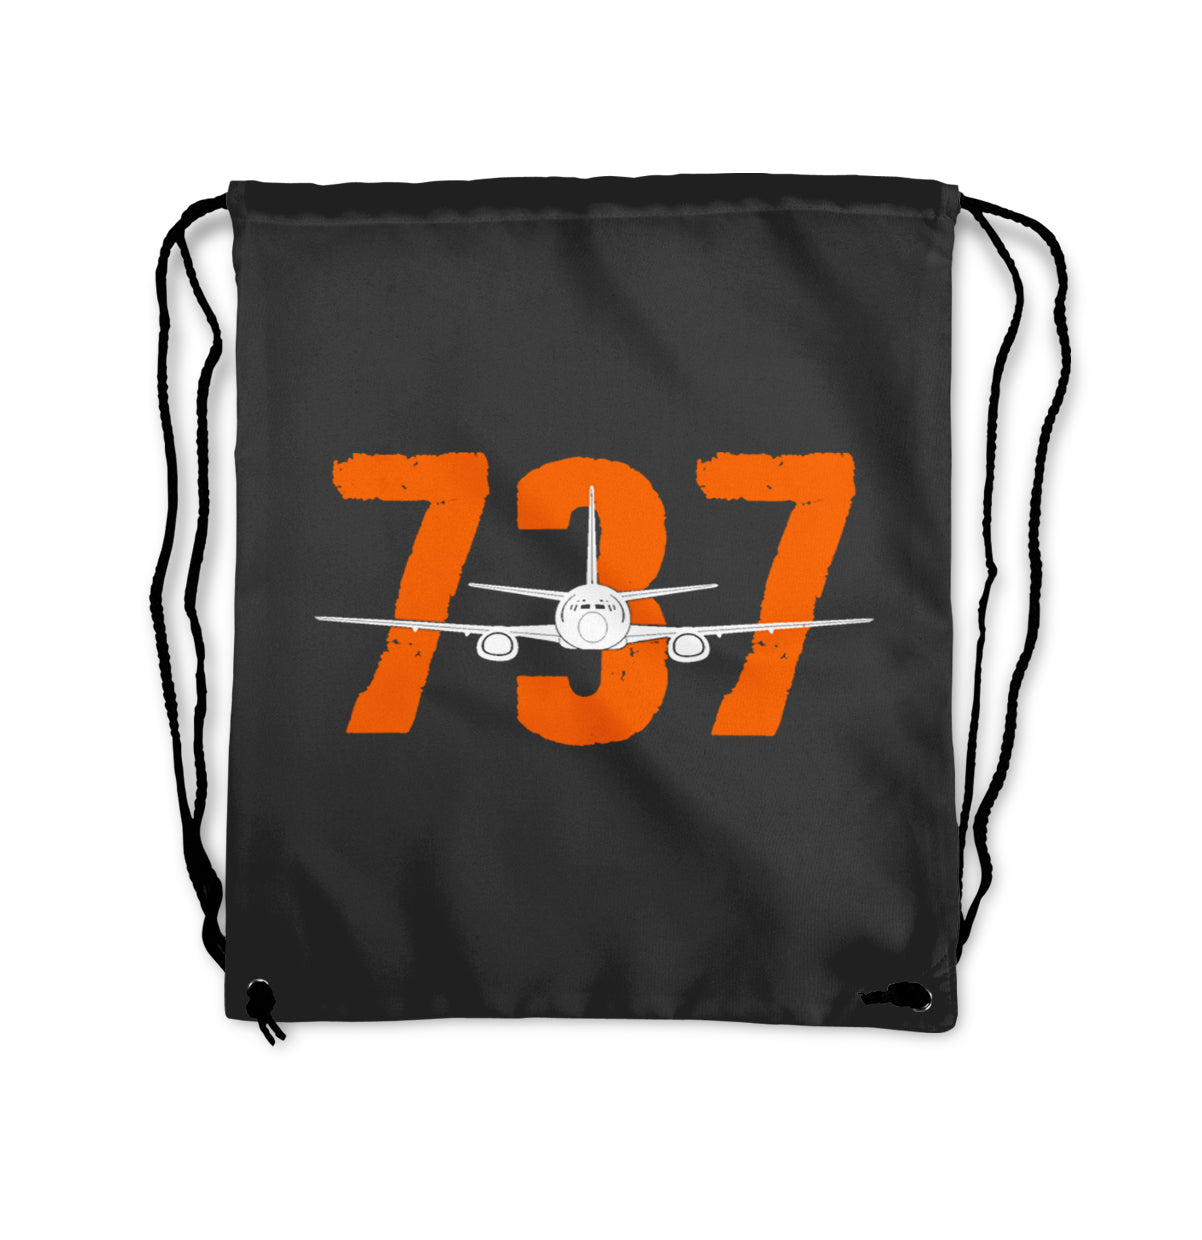 Boeing 737 Designed Drawstring Bags